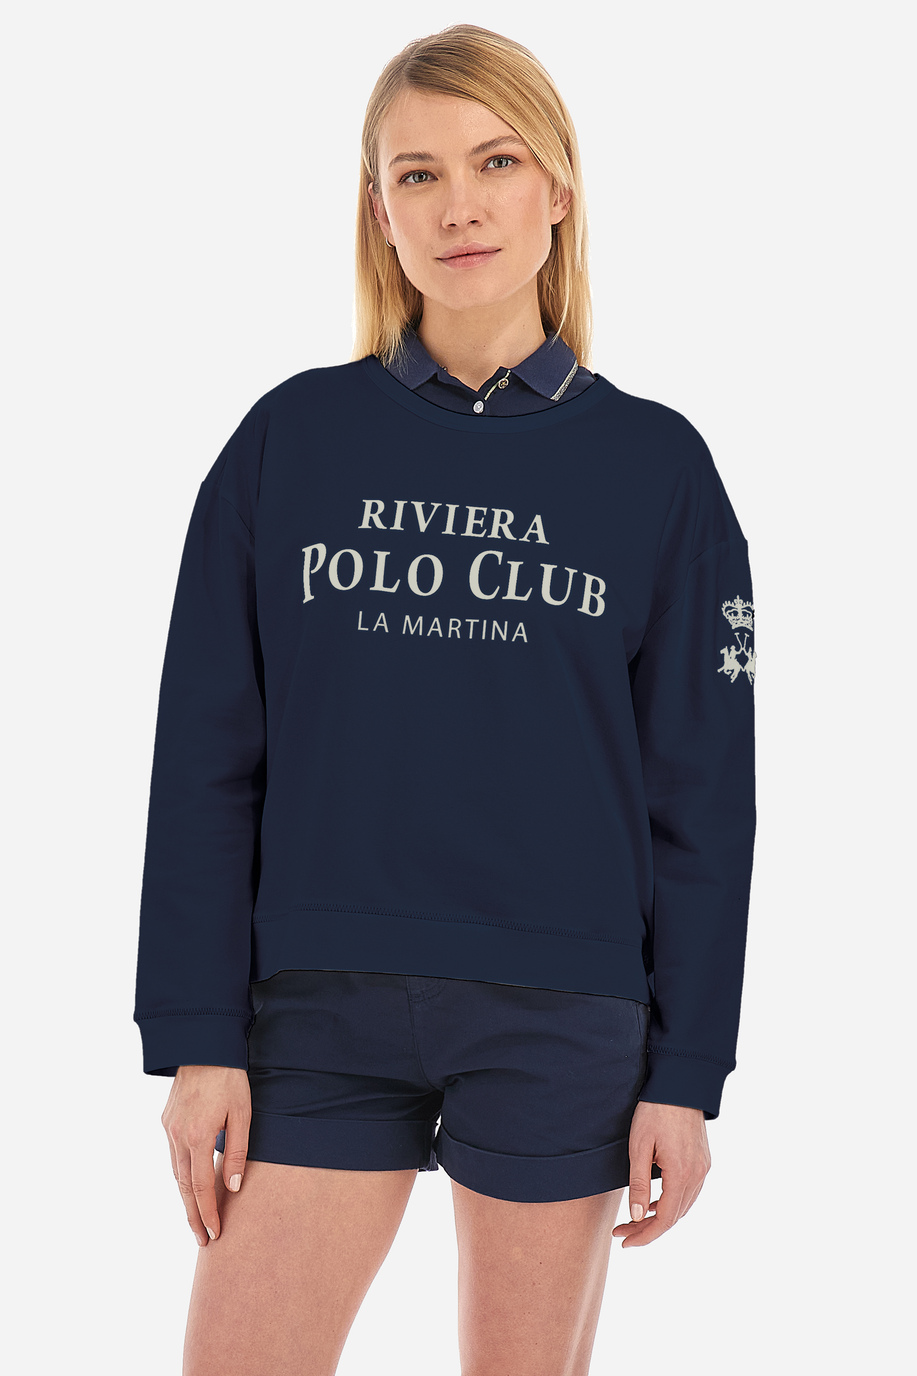 Damen-SweaT-shirt aus Baumwollmischung mit normaler Passform- Venita - Sweatshirts | La Martina - Official Online Shop